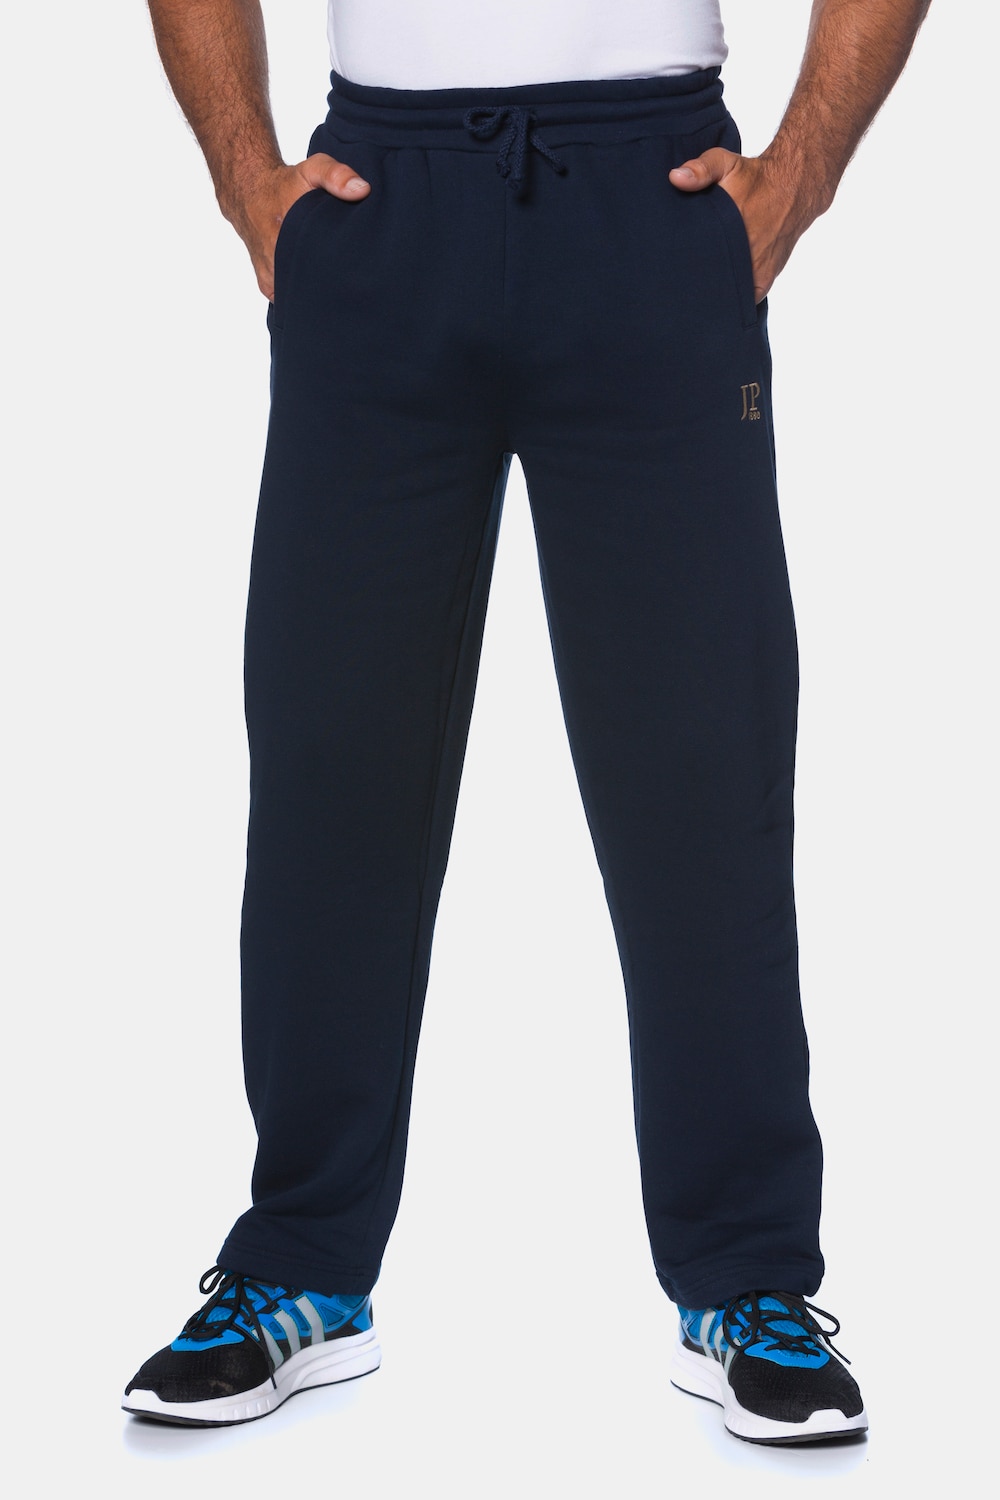 Große Größen Jogginghose, Herren, blau, Größe: XL, Baumwolle/Polyester, JP1880